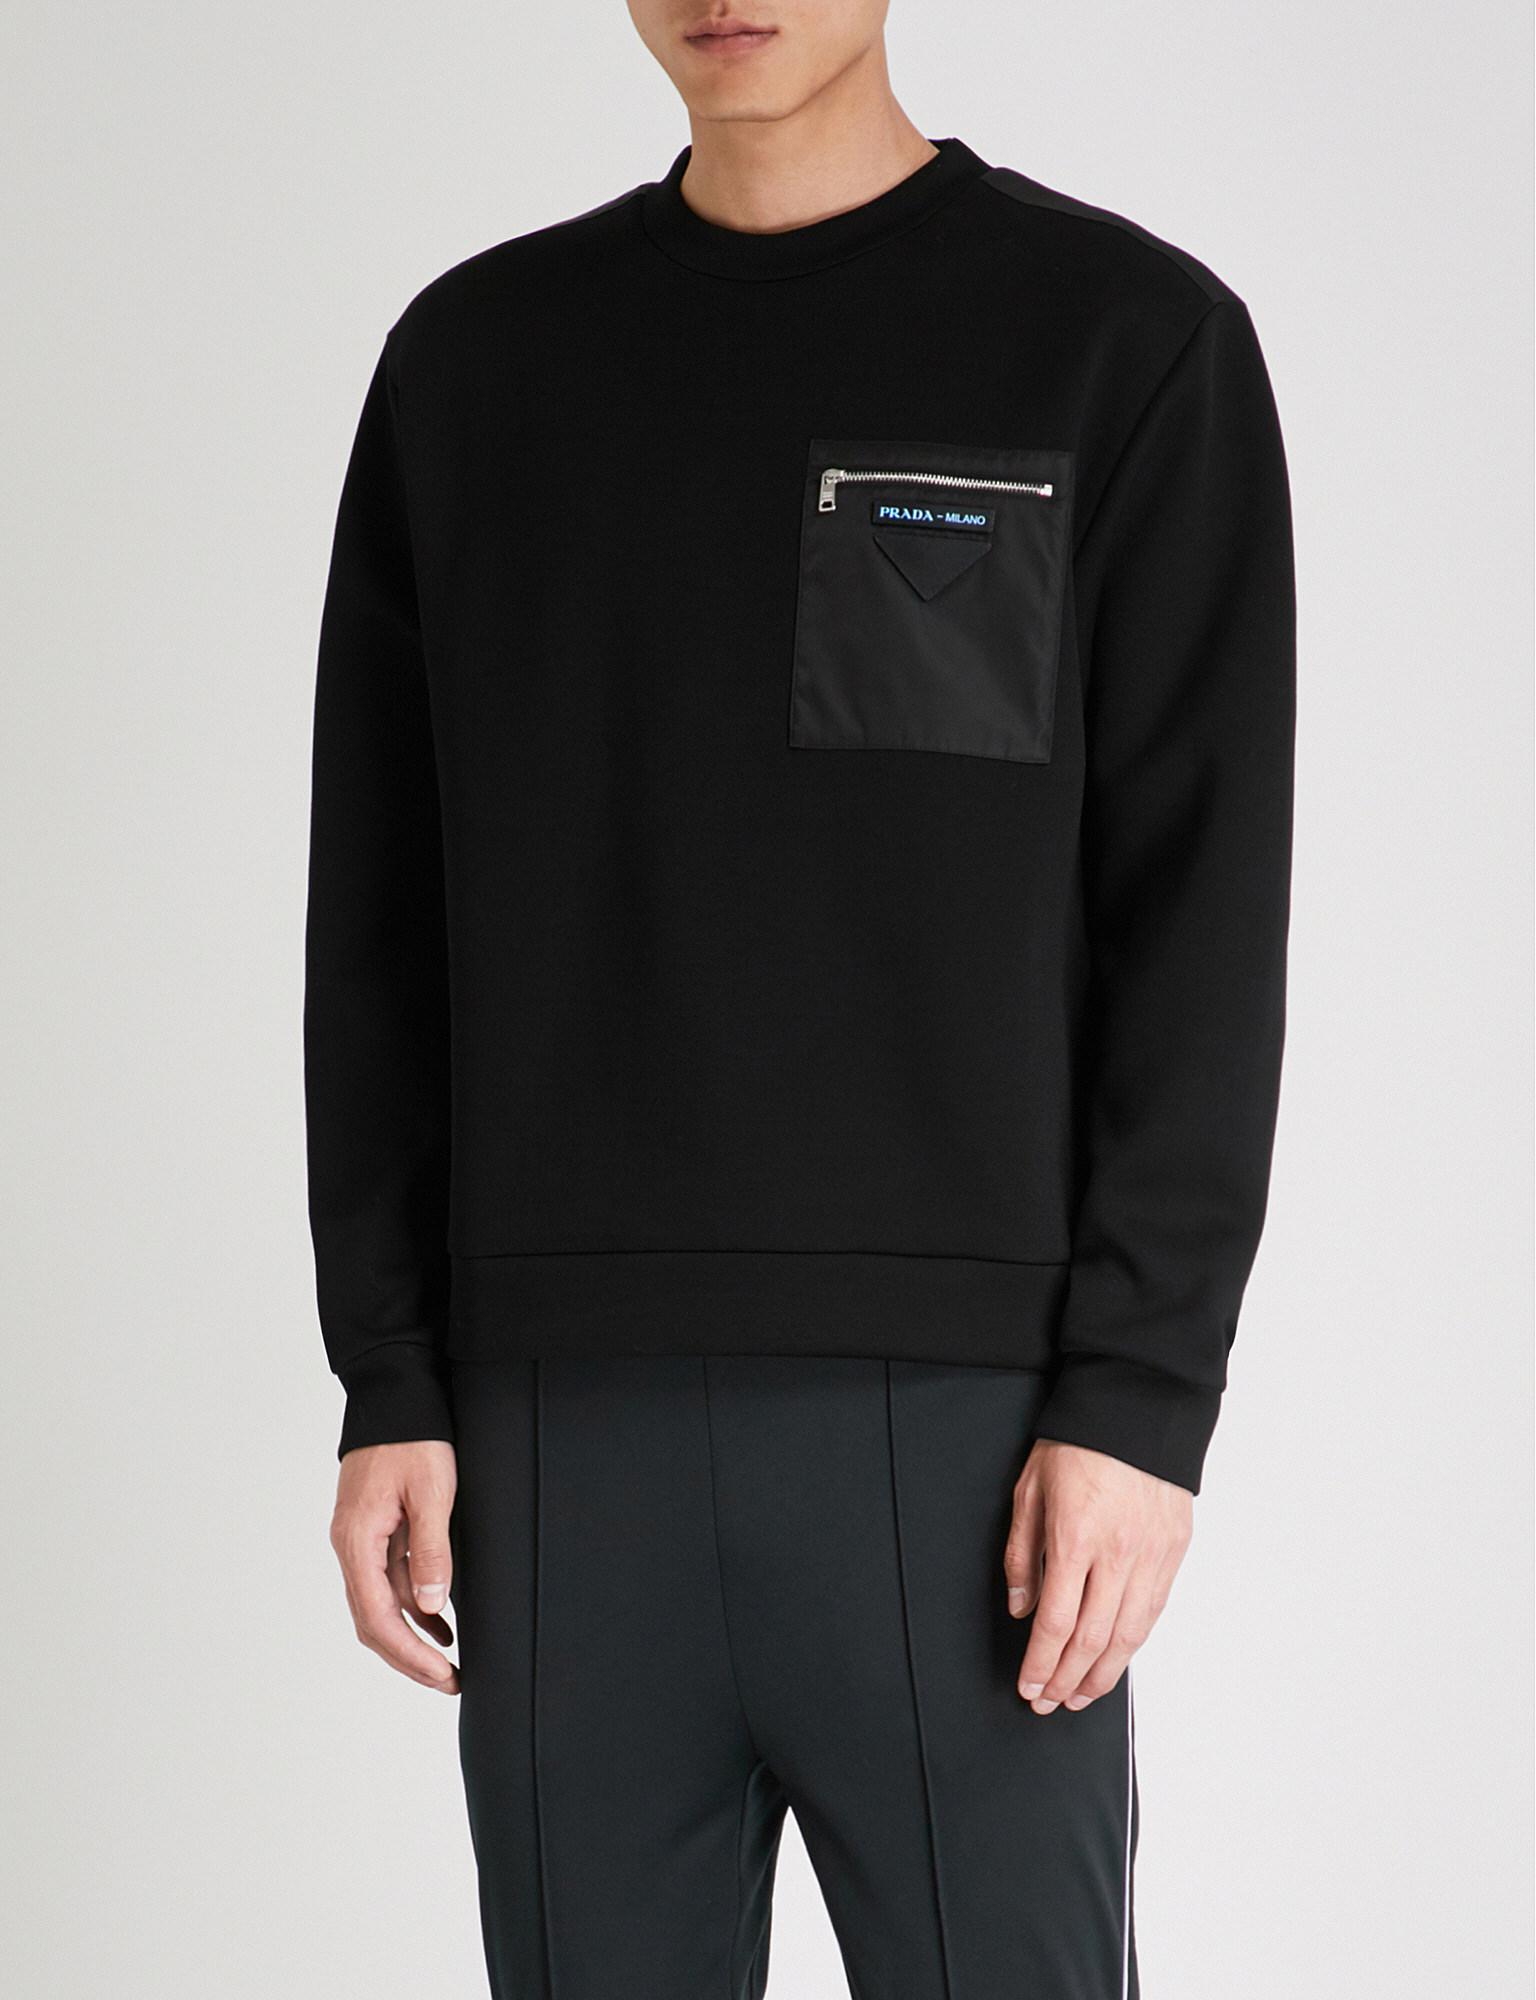 Prada Milano Cotton-blend Sweatshirt in Black for Men | Lyst